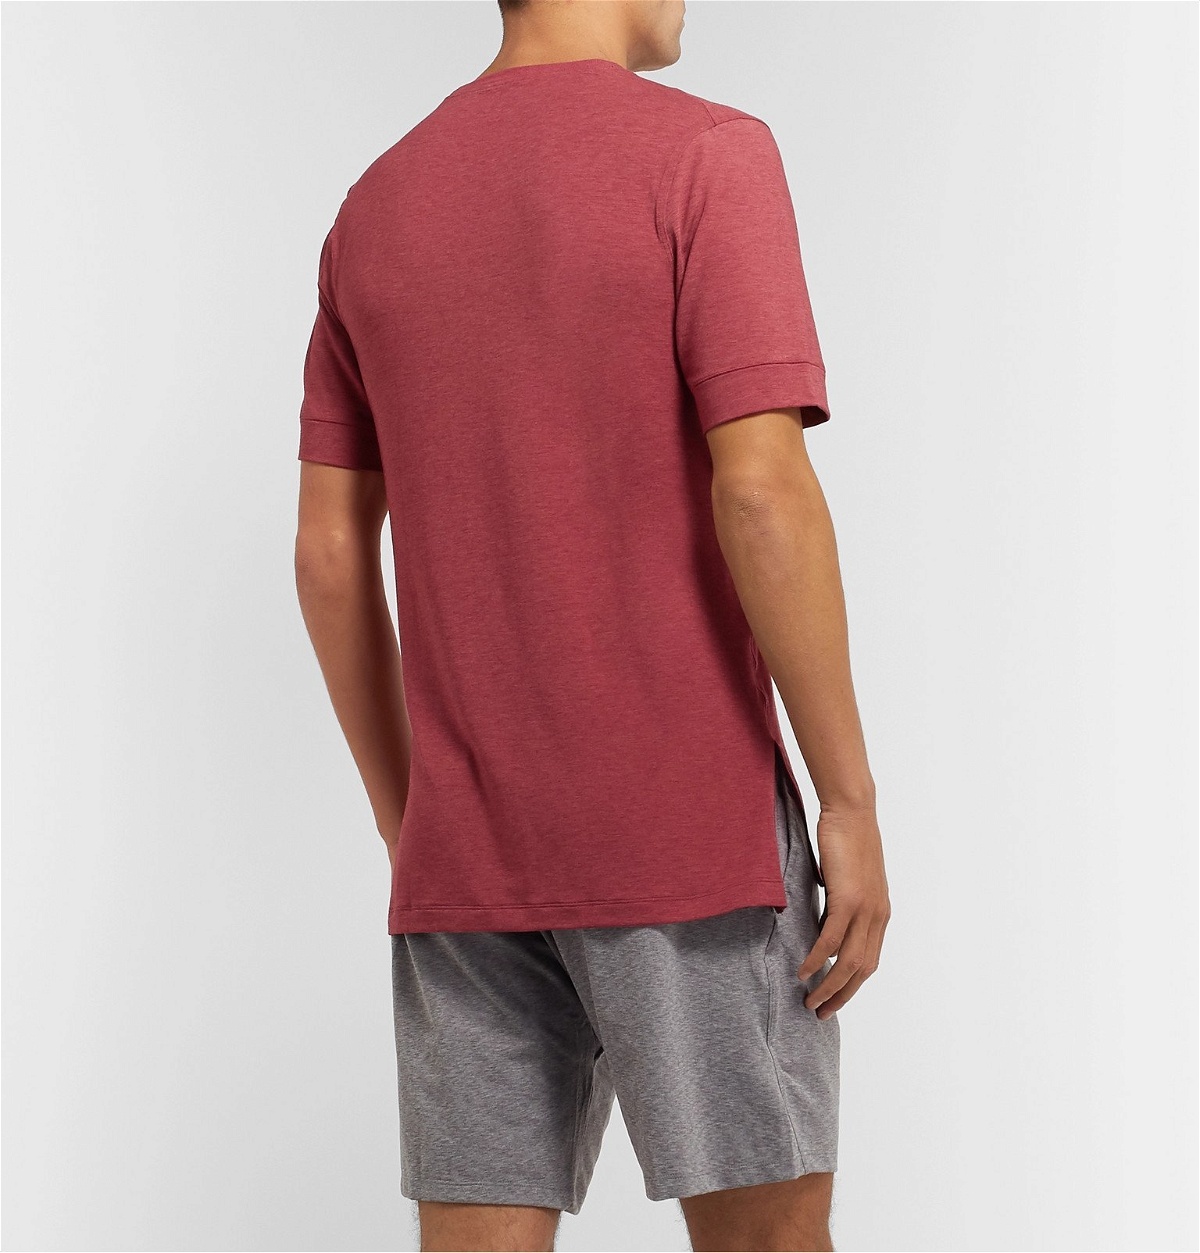 Nike Training - Transcend Slim-Fit Mélange Dri-FIT Yoga T-Shirt